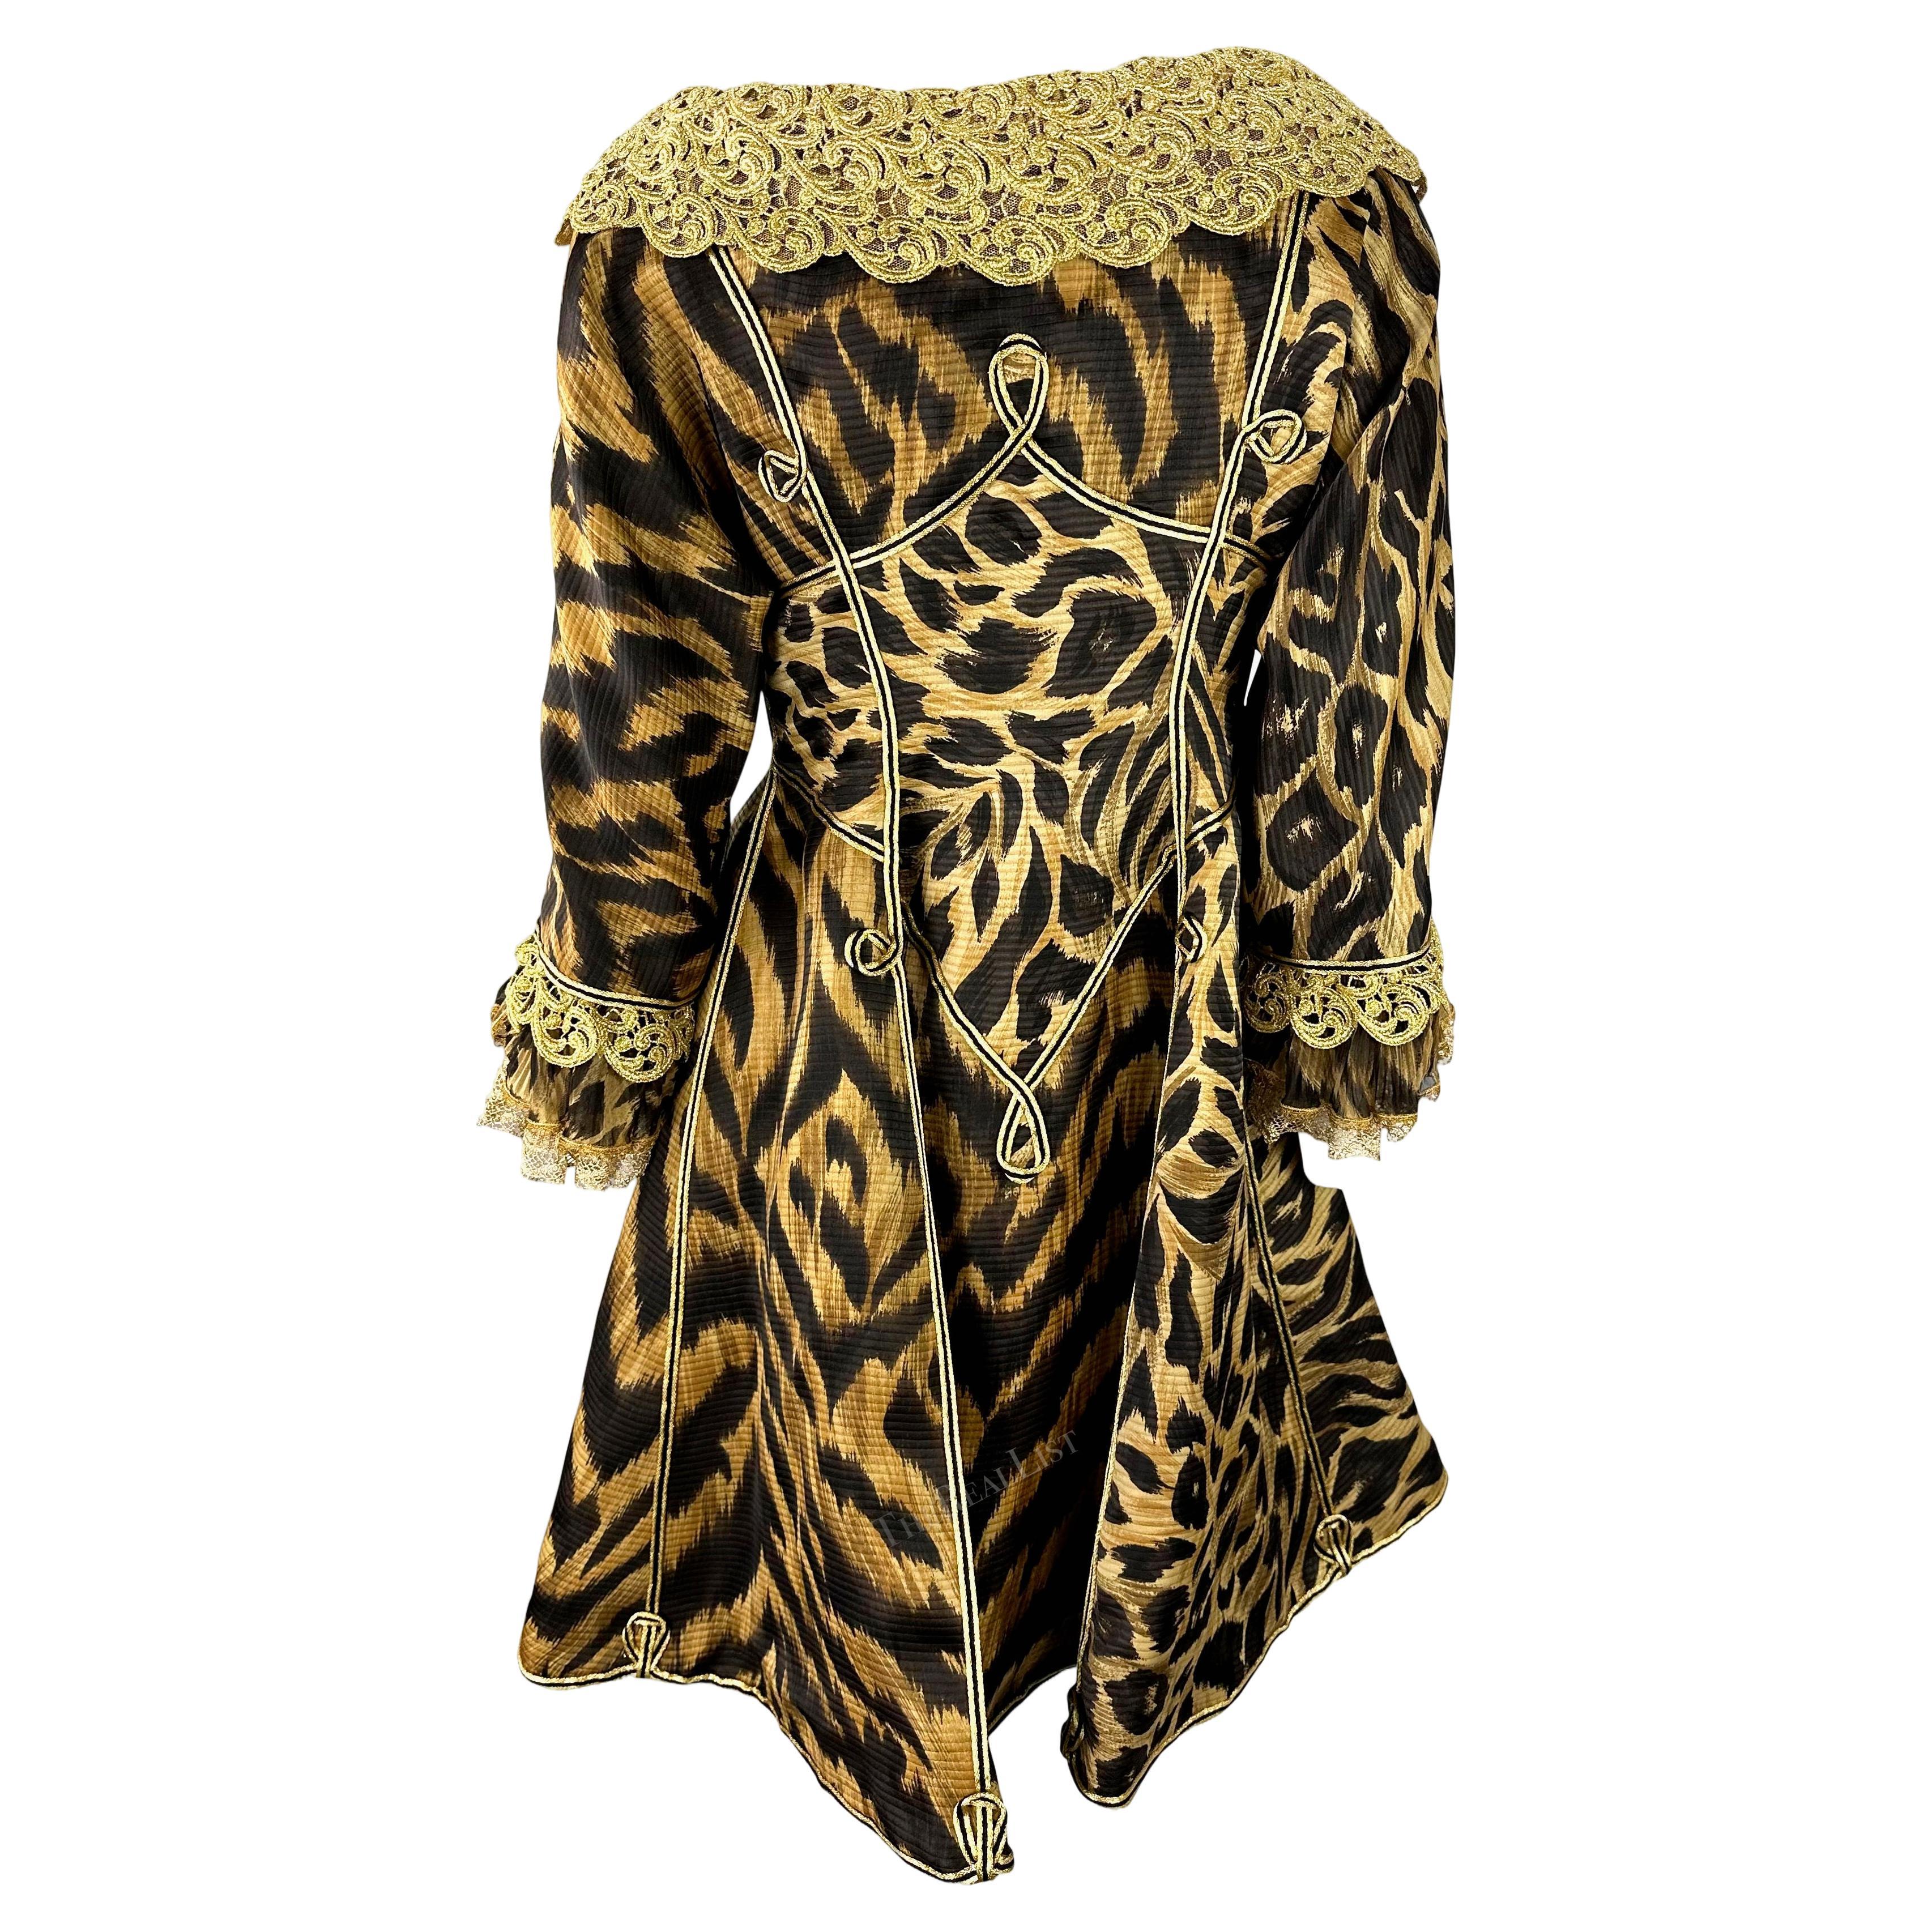 S/S 1992 Atelier Versace Haute Couture Runway Leopard Silk Gold Lace Coat Dress For Sale 6